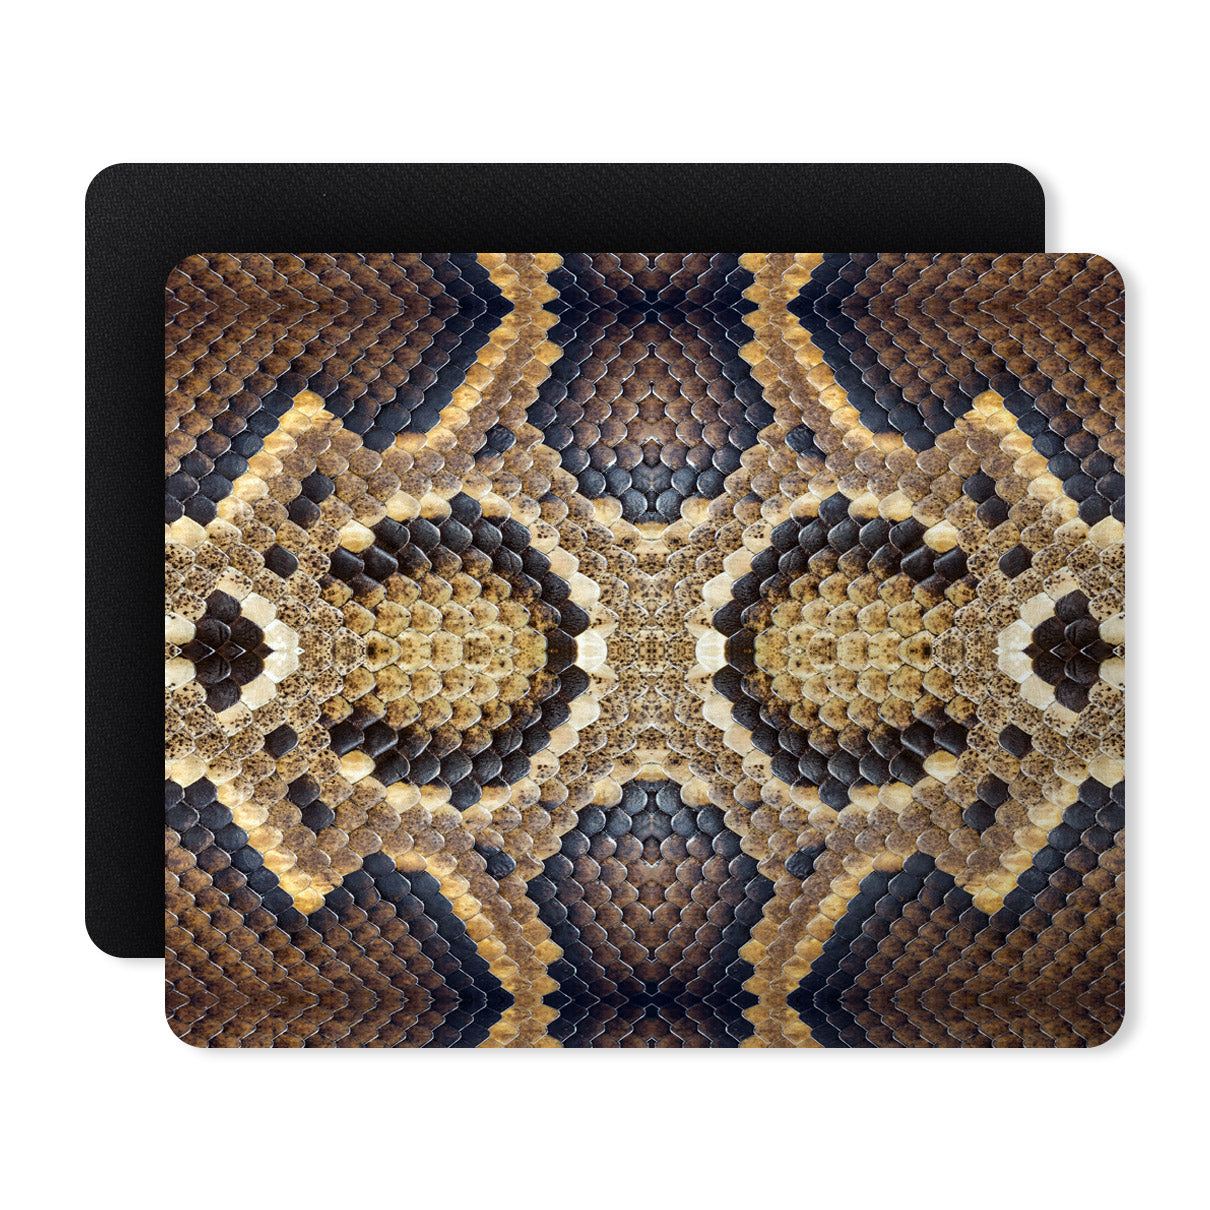 Snake Skin Background Designer Printed Premium Mouse pad (9 in x 7.5 in)